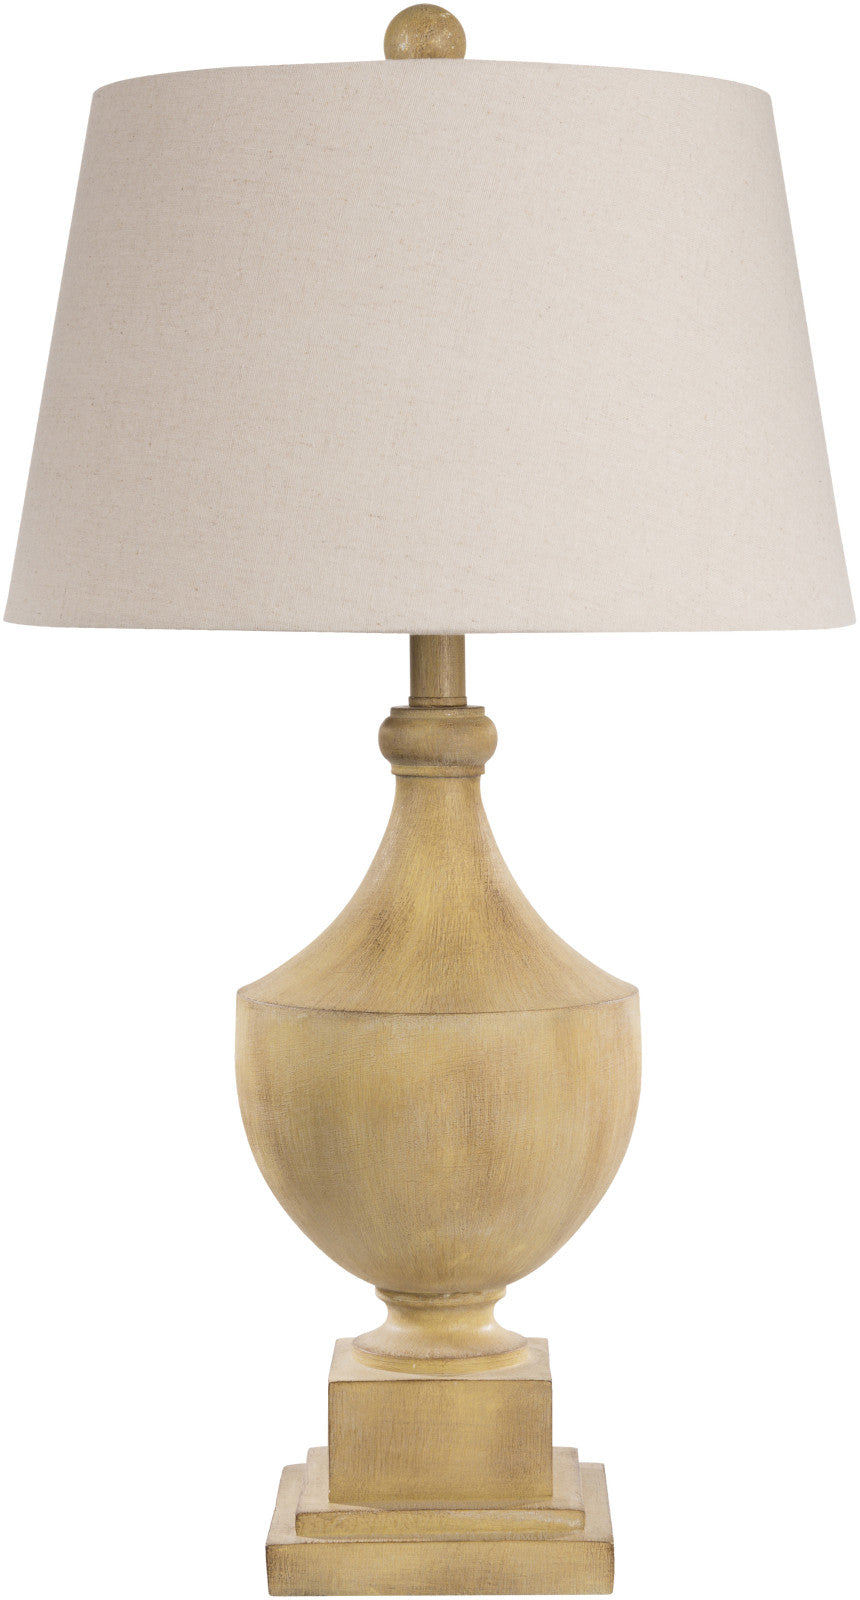 Surya Eleanor ERLP-001 Oatmeal Lamp Table Lamp